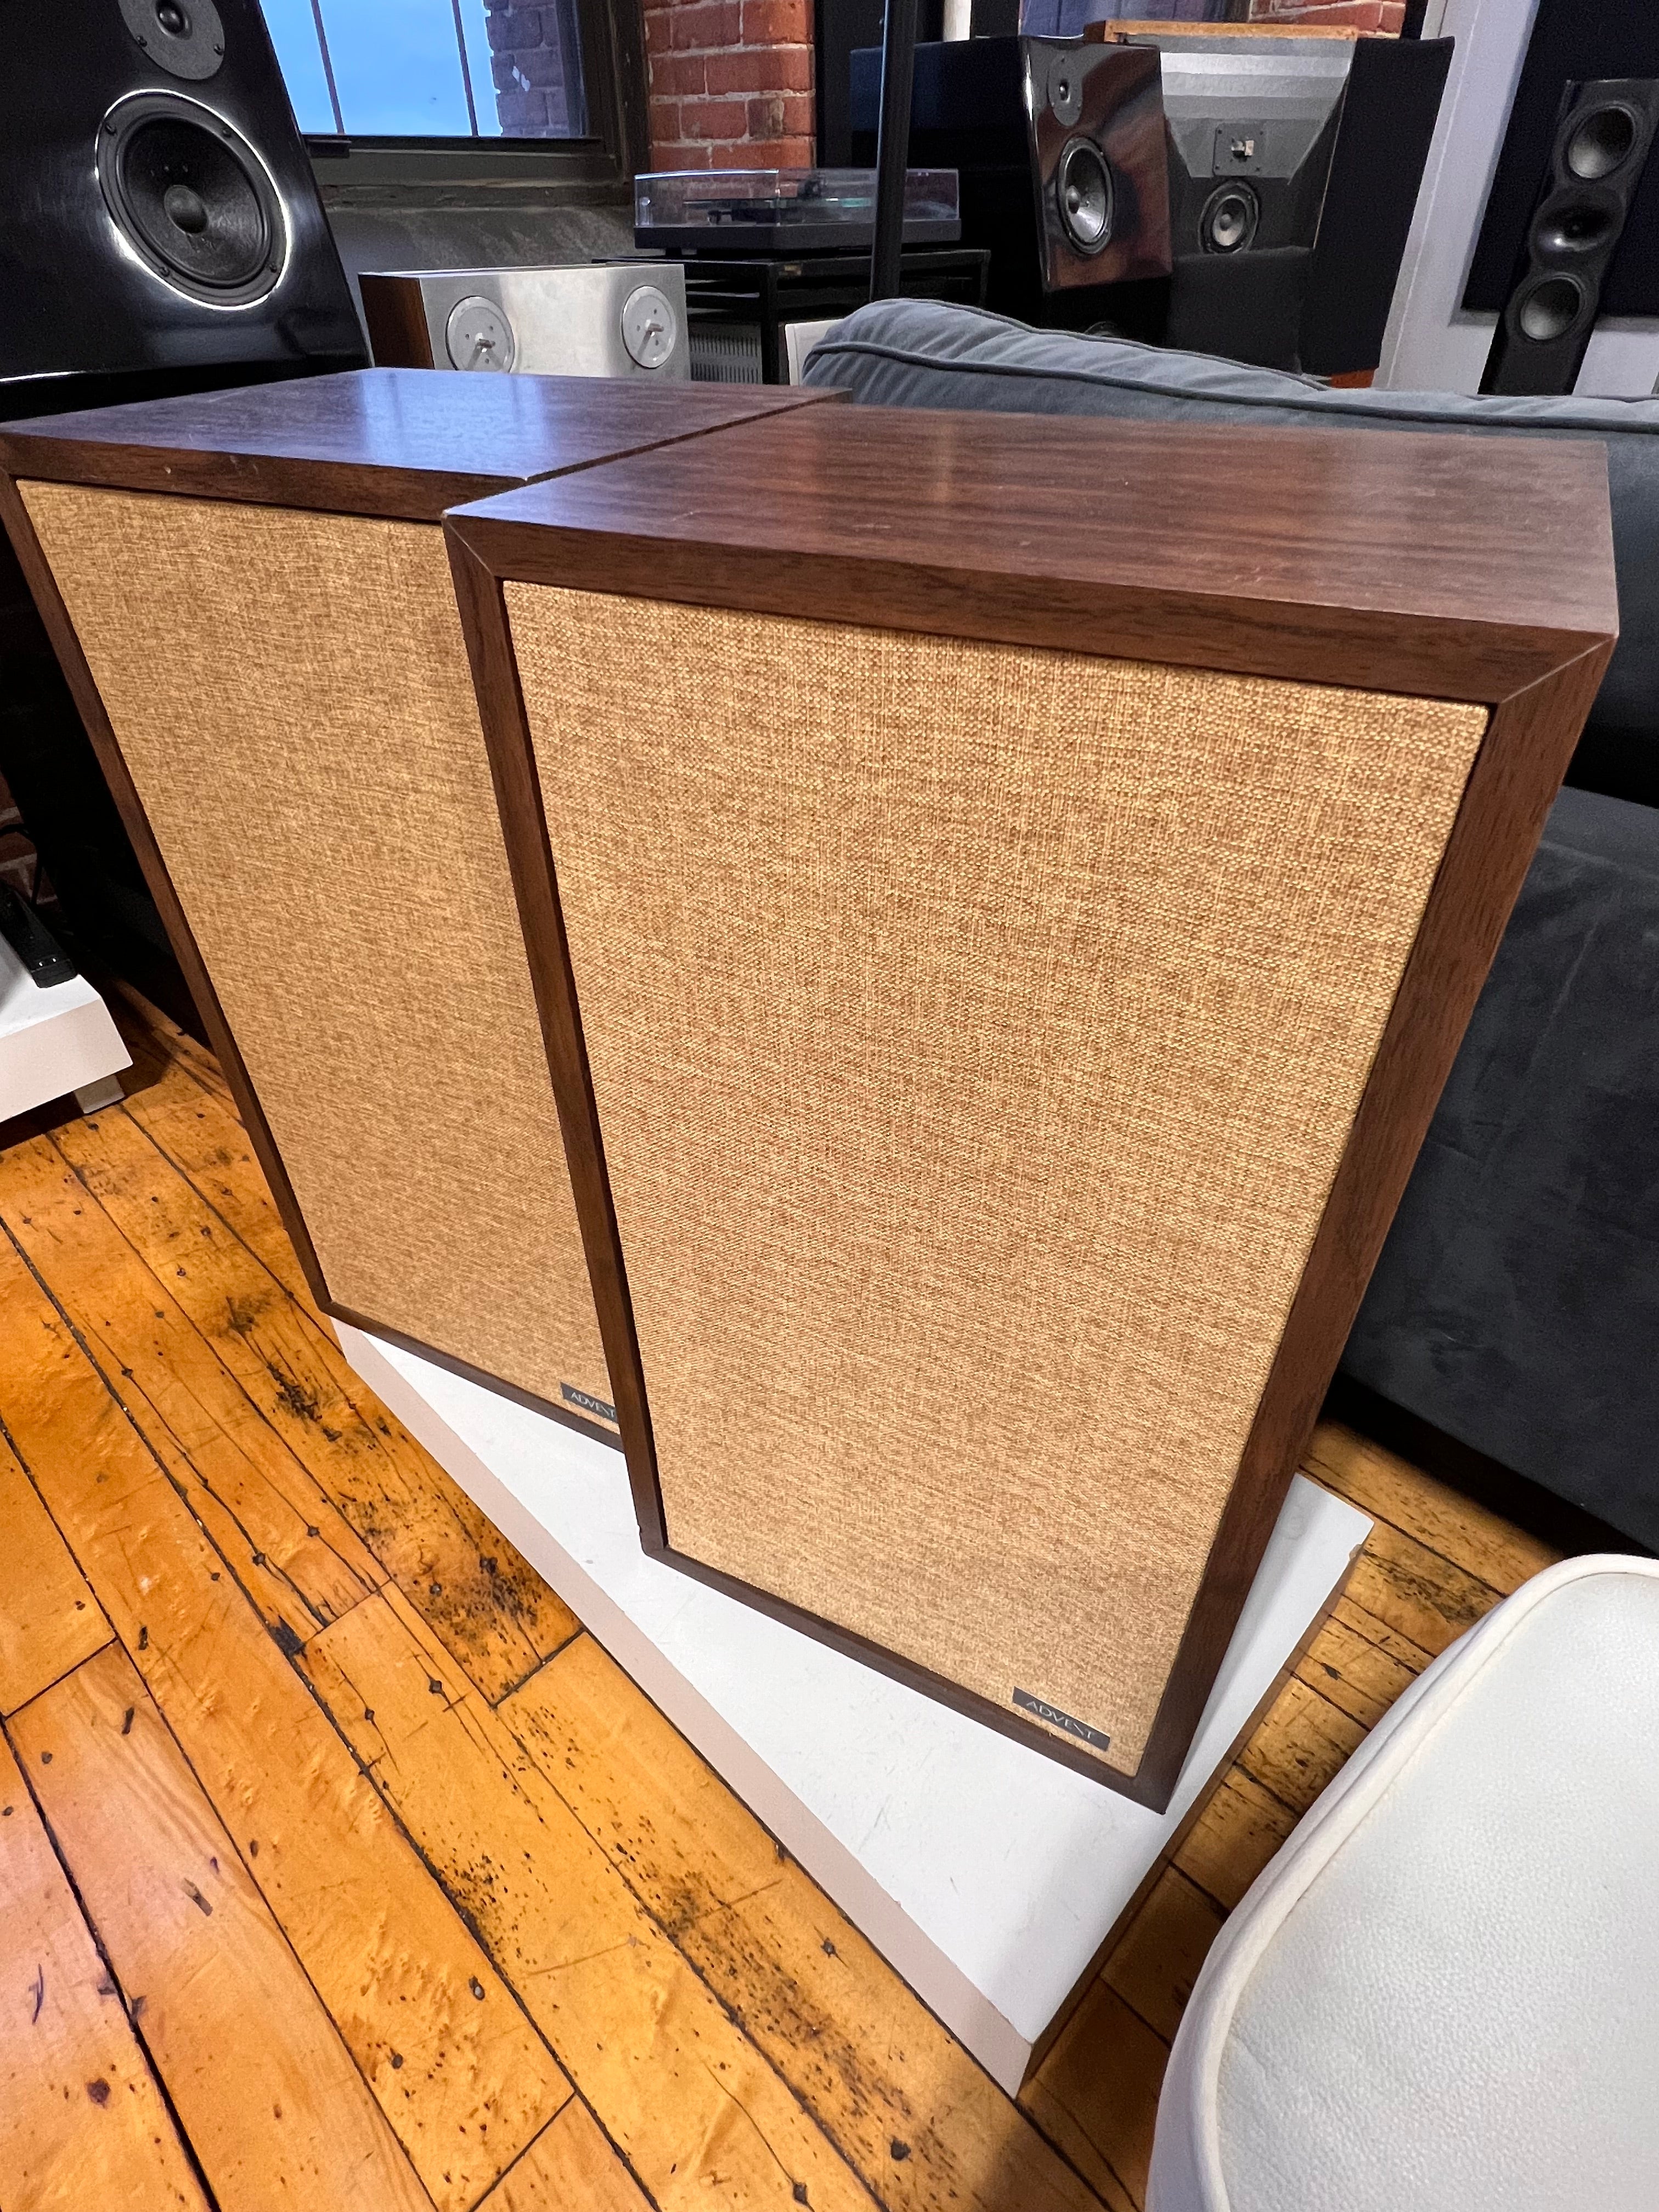 The "New" Advent Loudspeaker, Utility Cabinets, Simulated Wood Veneer